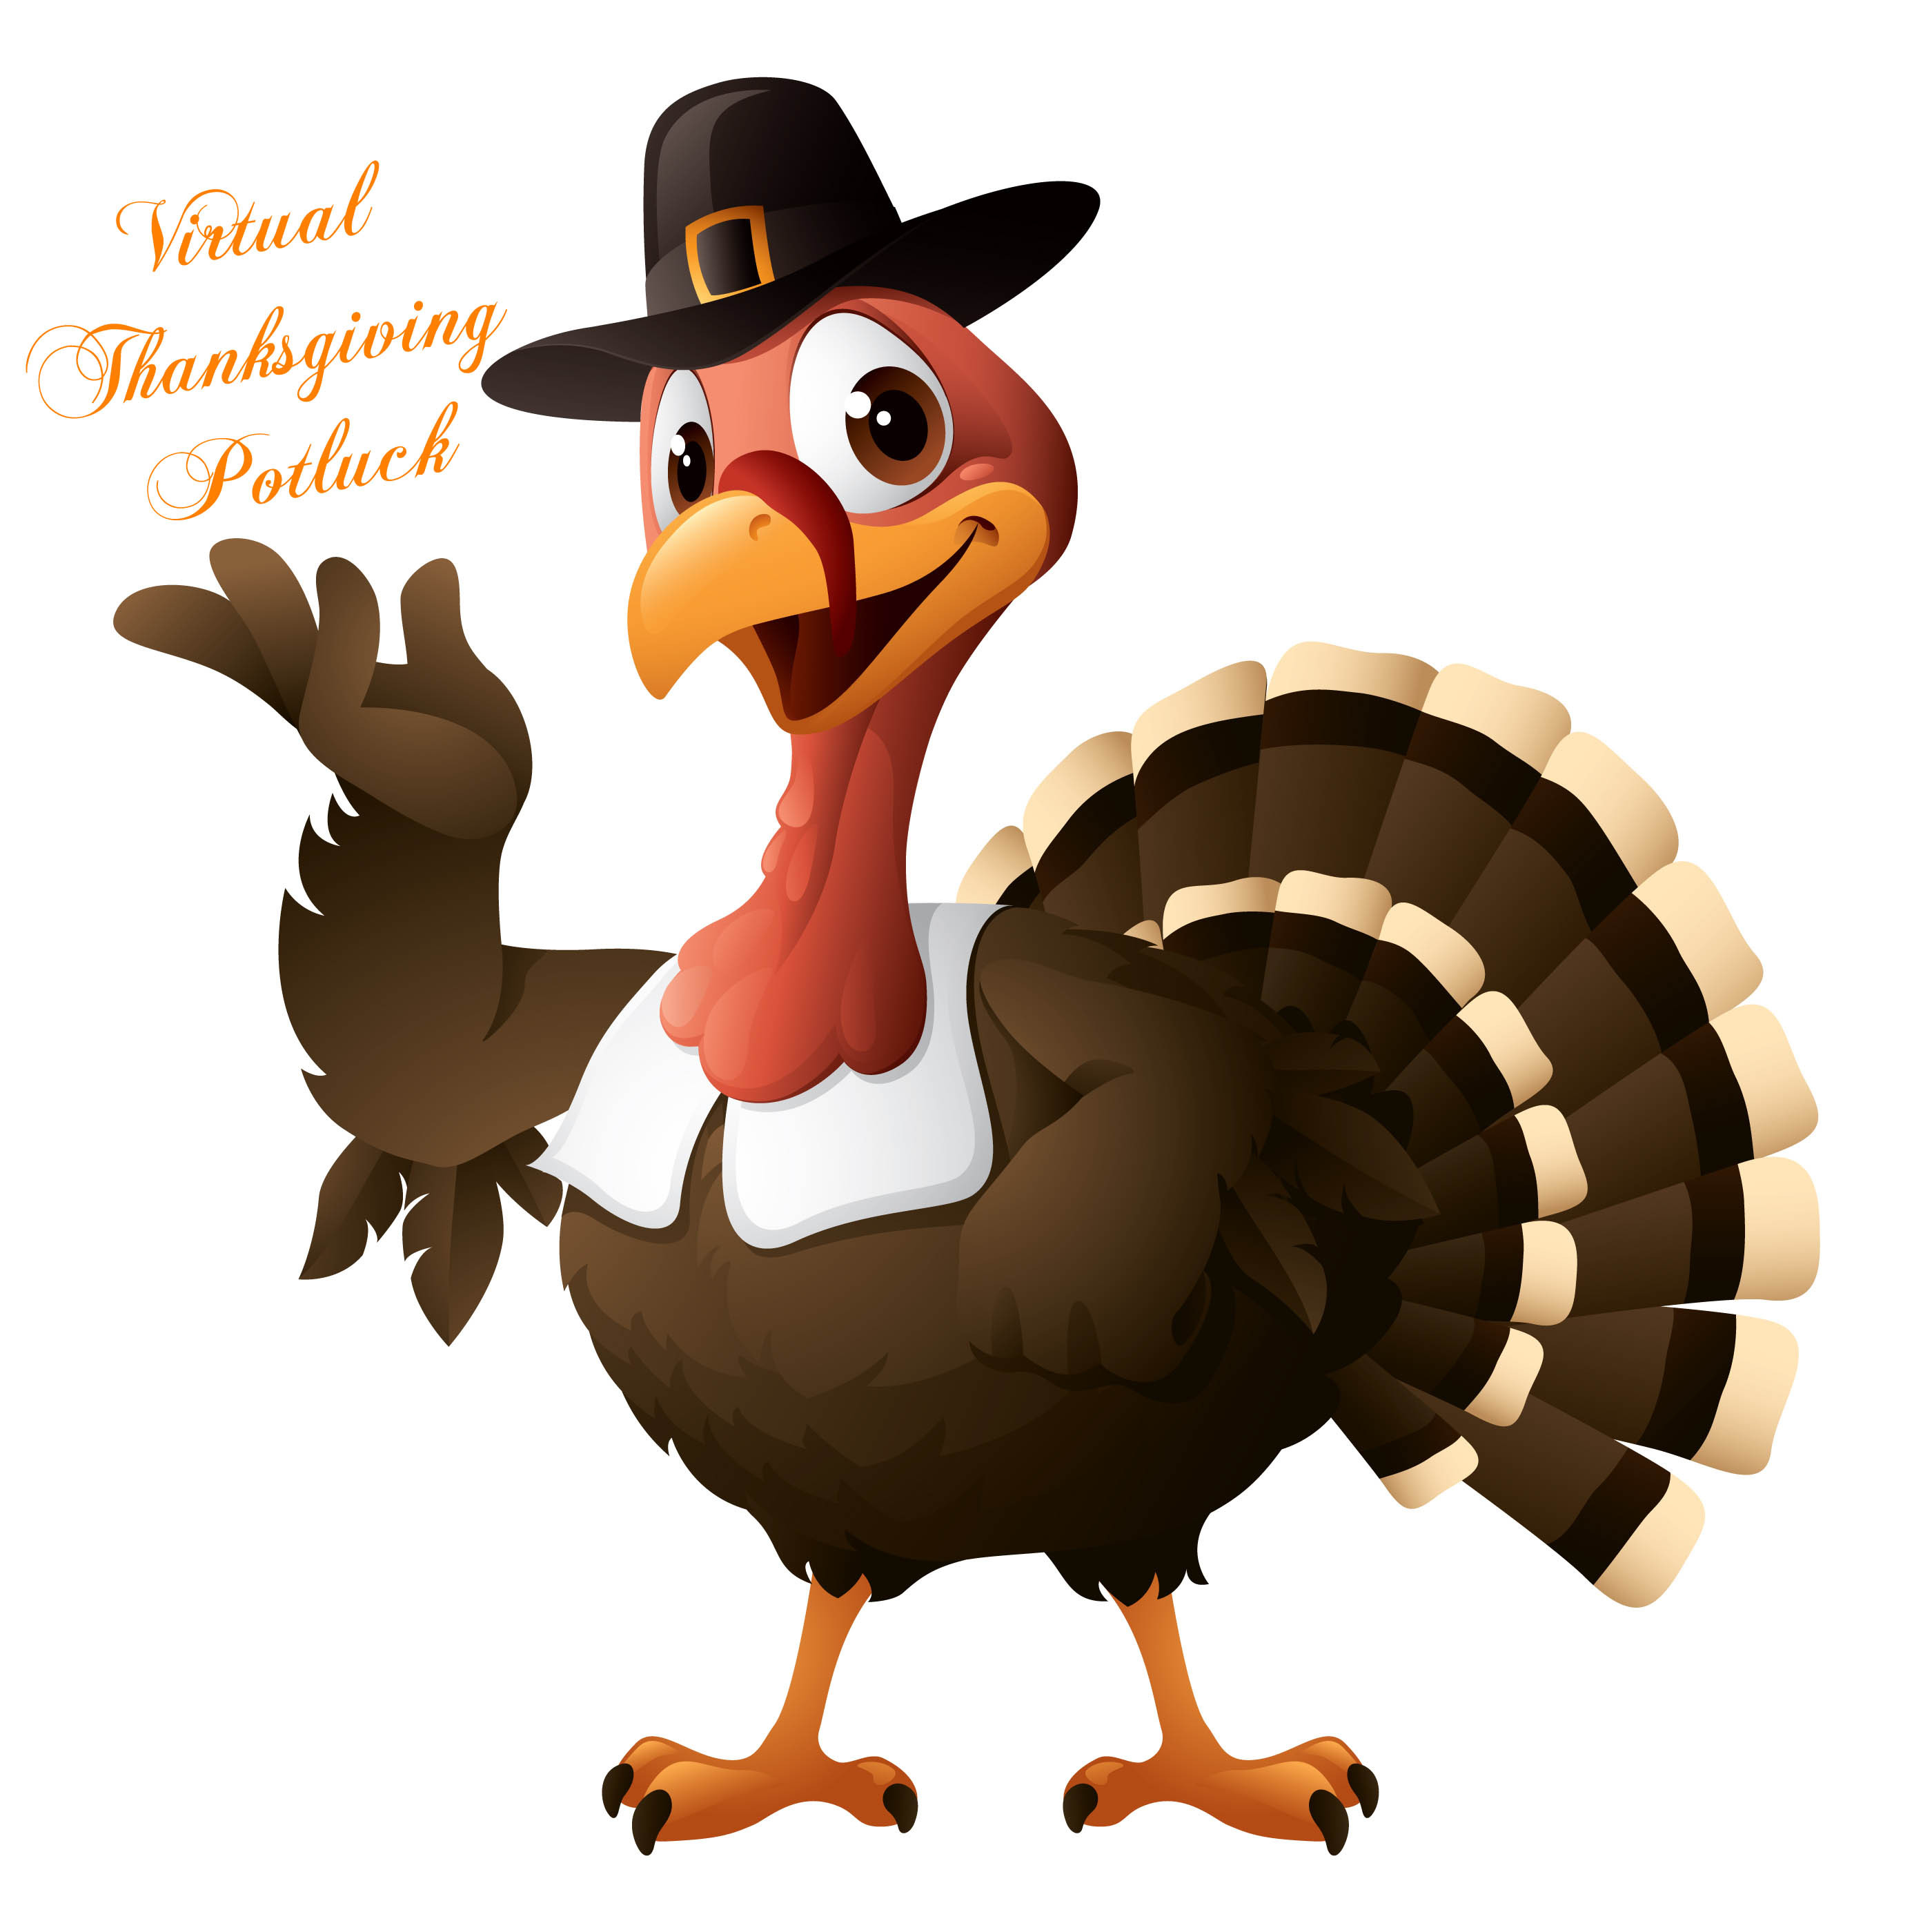 When Should I Buy My Turkey For Thanksgiving
 virtual thanksgiving potluck